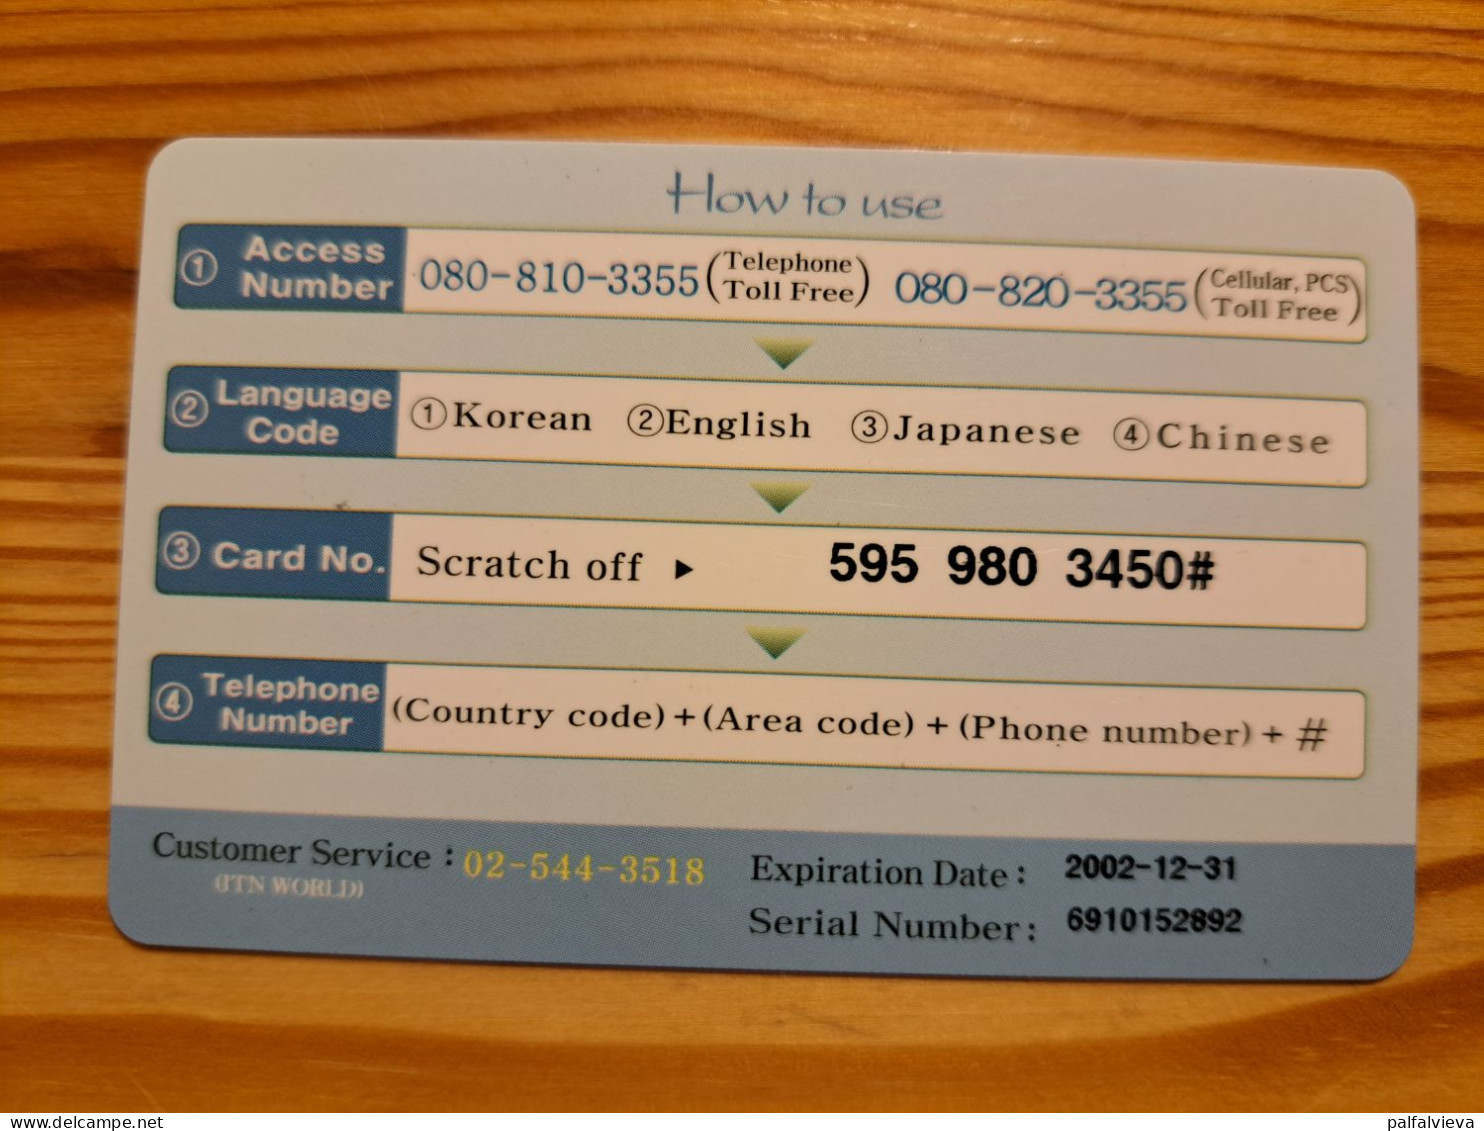 Prepaid Phonecard South Korea, Best Philippines Card - Flag - Korea (Süd)